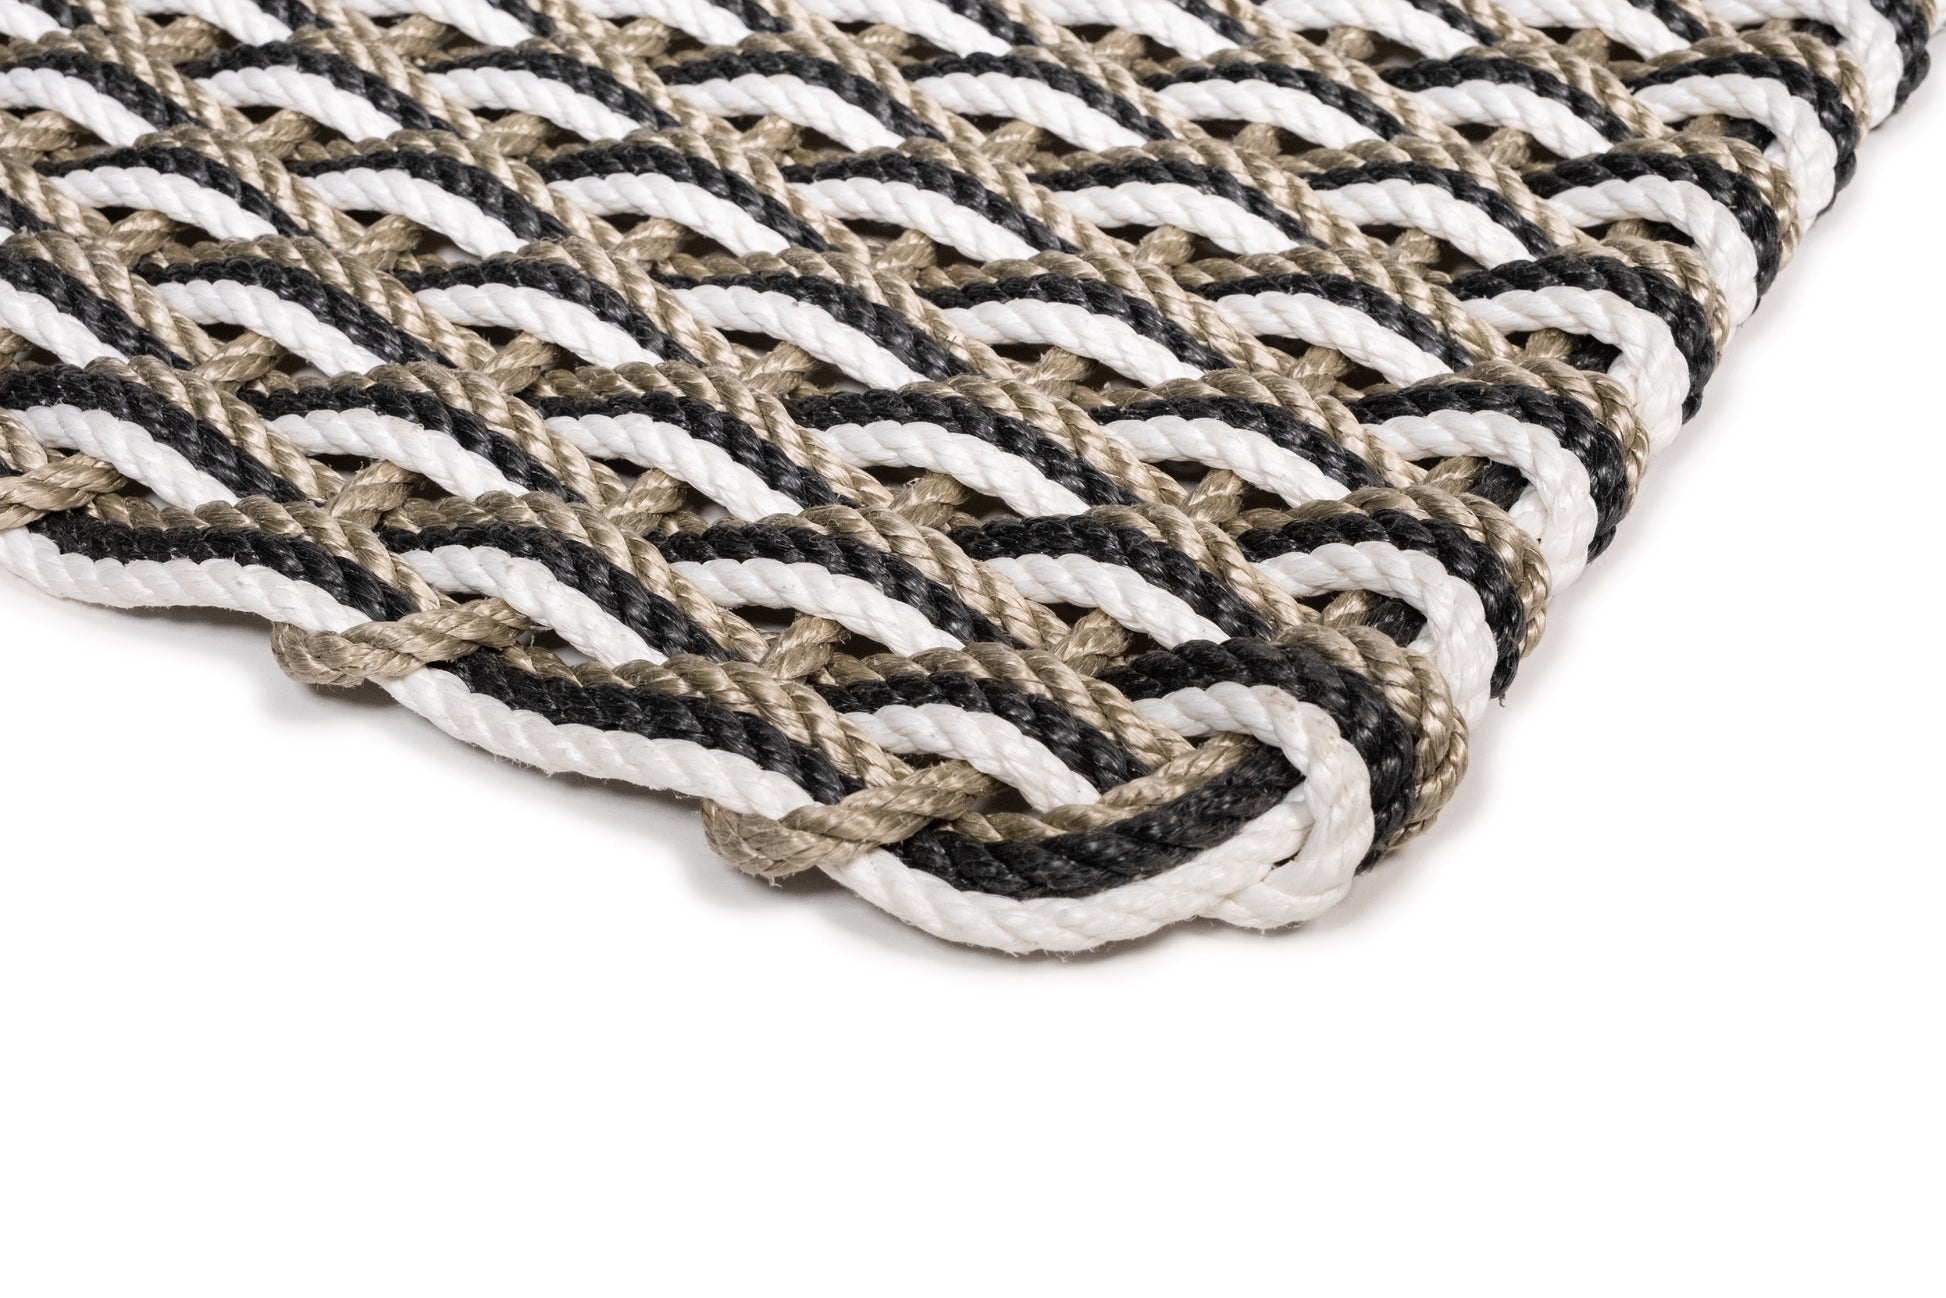 Charcoal, Pearl Stripe, Woven Rope Doormats